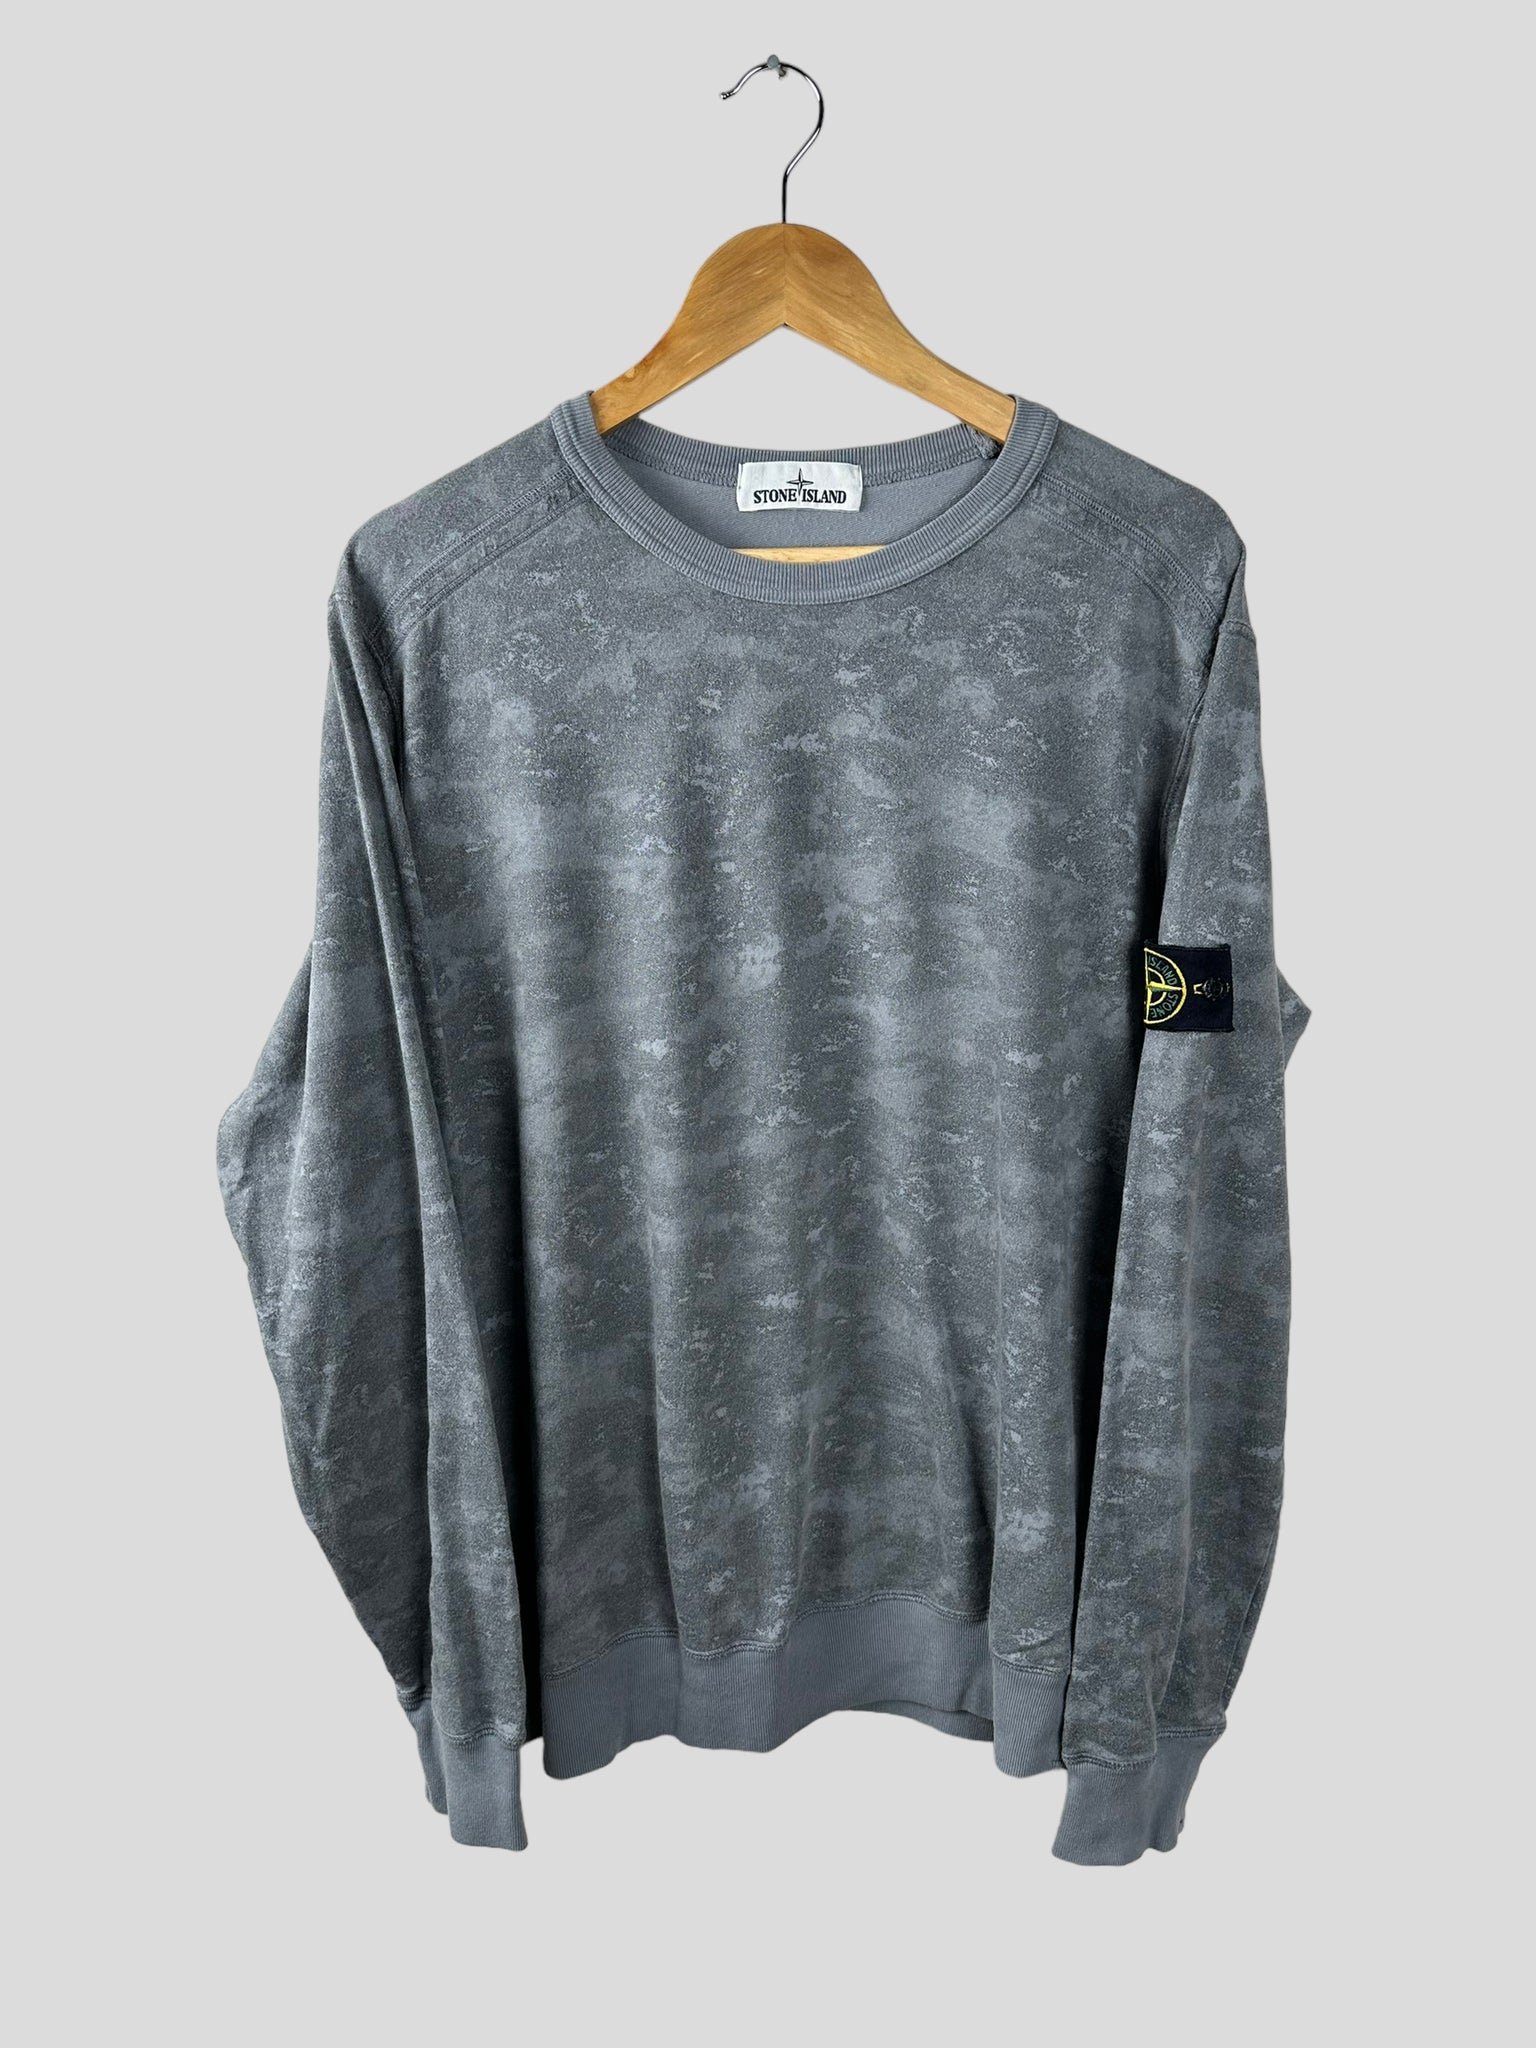 Stone Island Camo Sweatshirt - XL